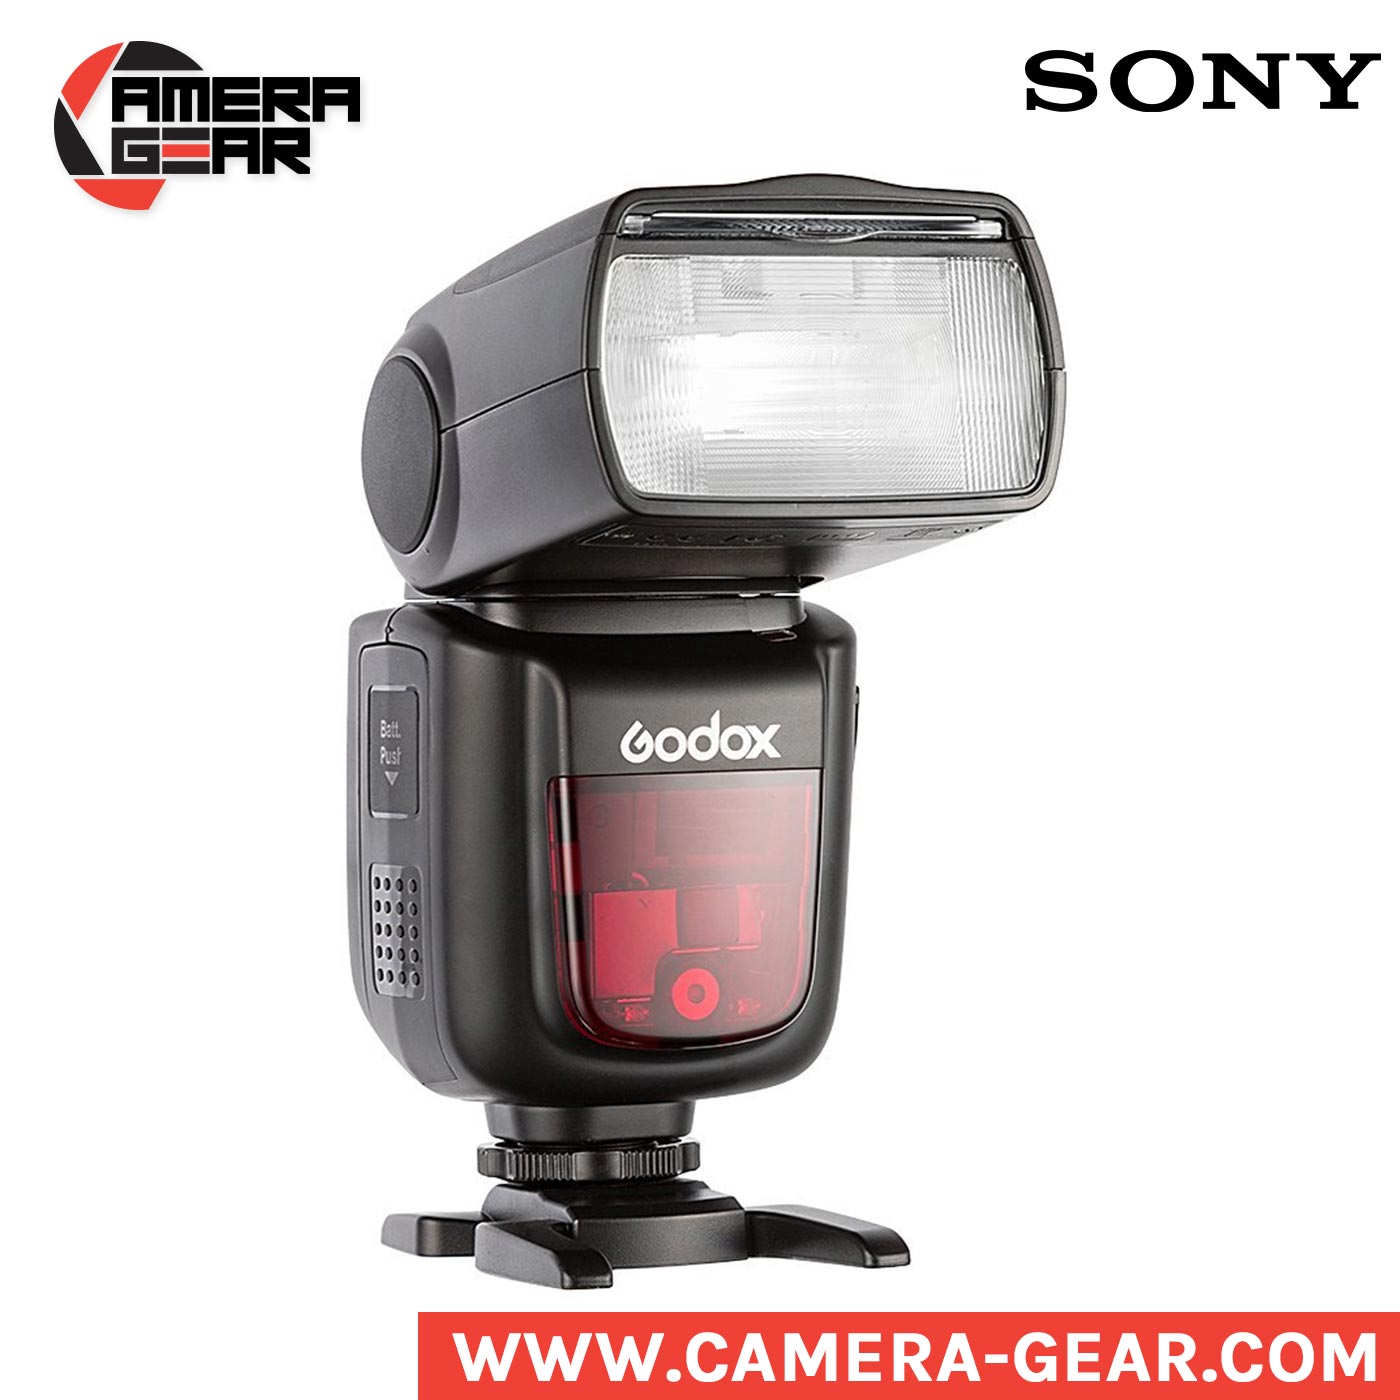 Godox V860II-S Li-ion battery powered flash speedlite for Sony cameras